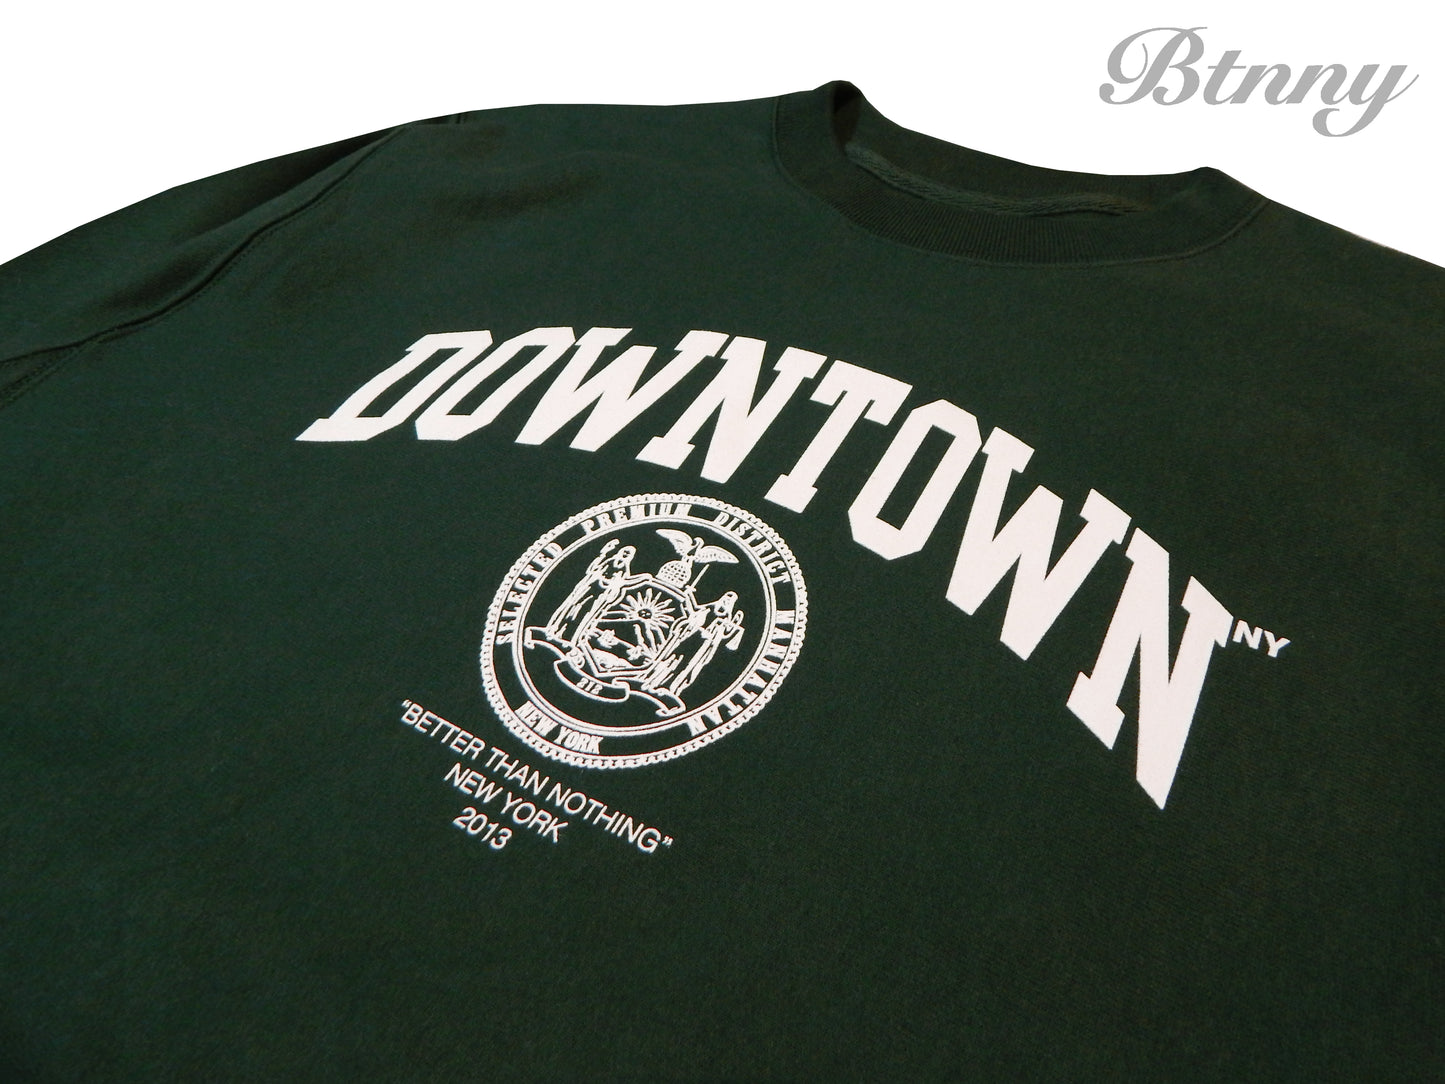 DOWNTOWN NY Crewneck Sweat Shirts